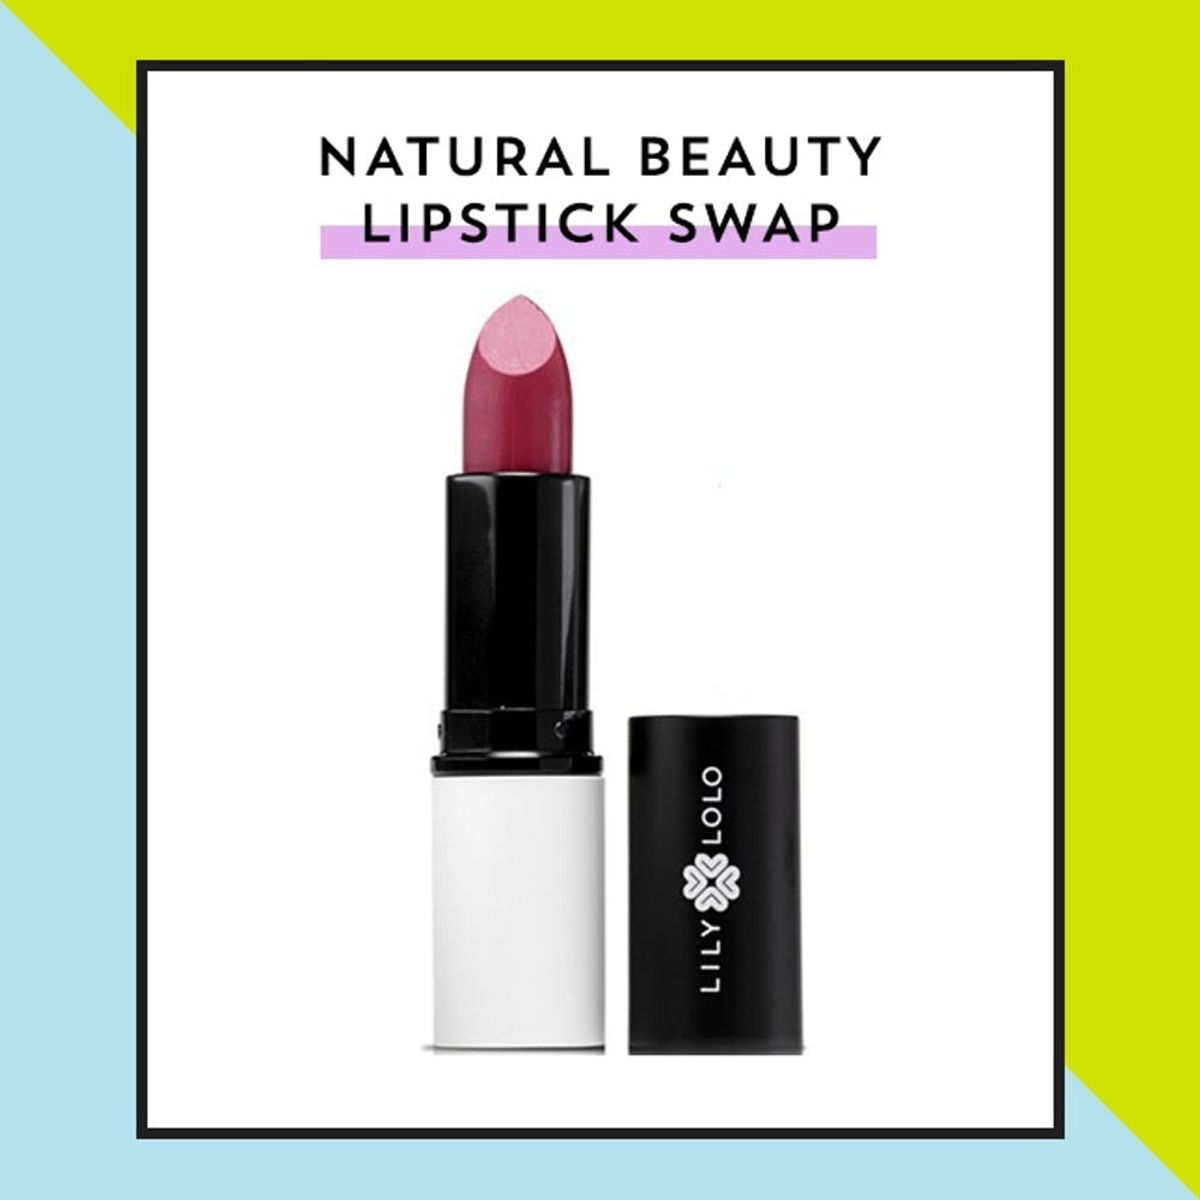 10 Natural Makeup + Beauty Product Swaps to Make ASAP